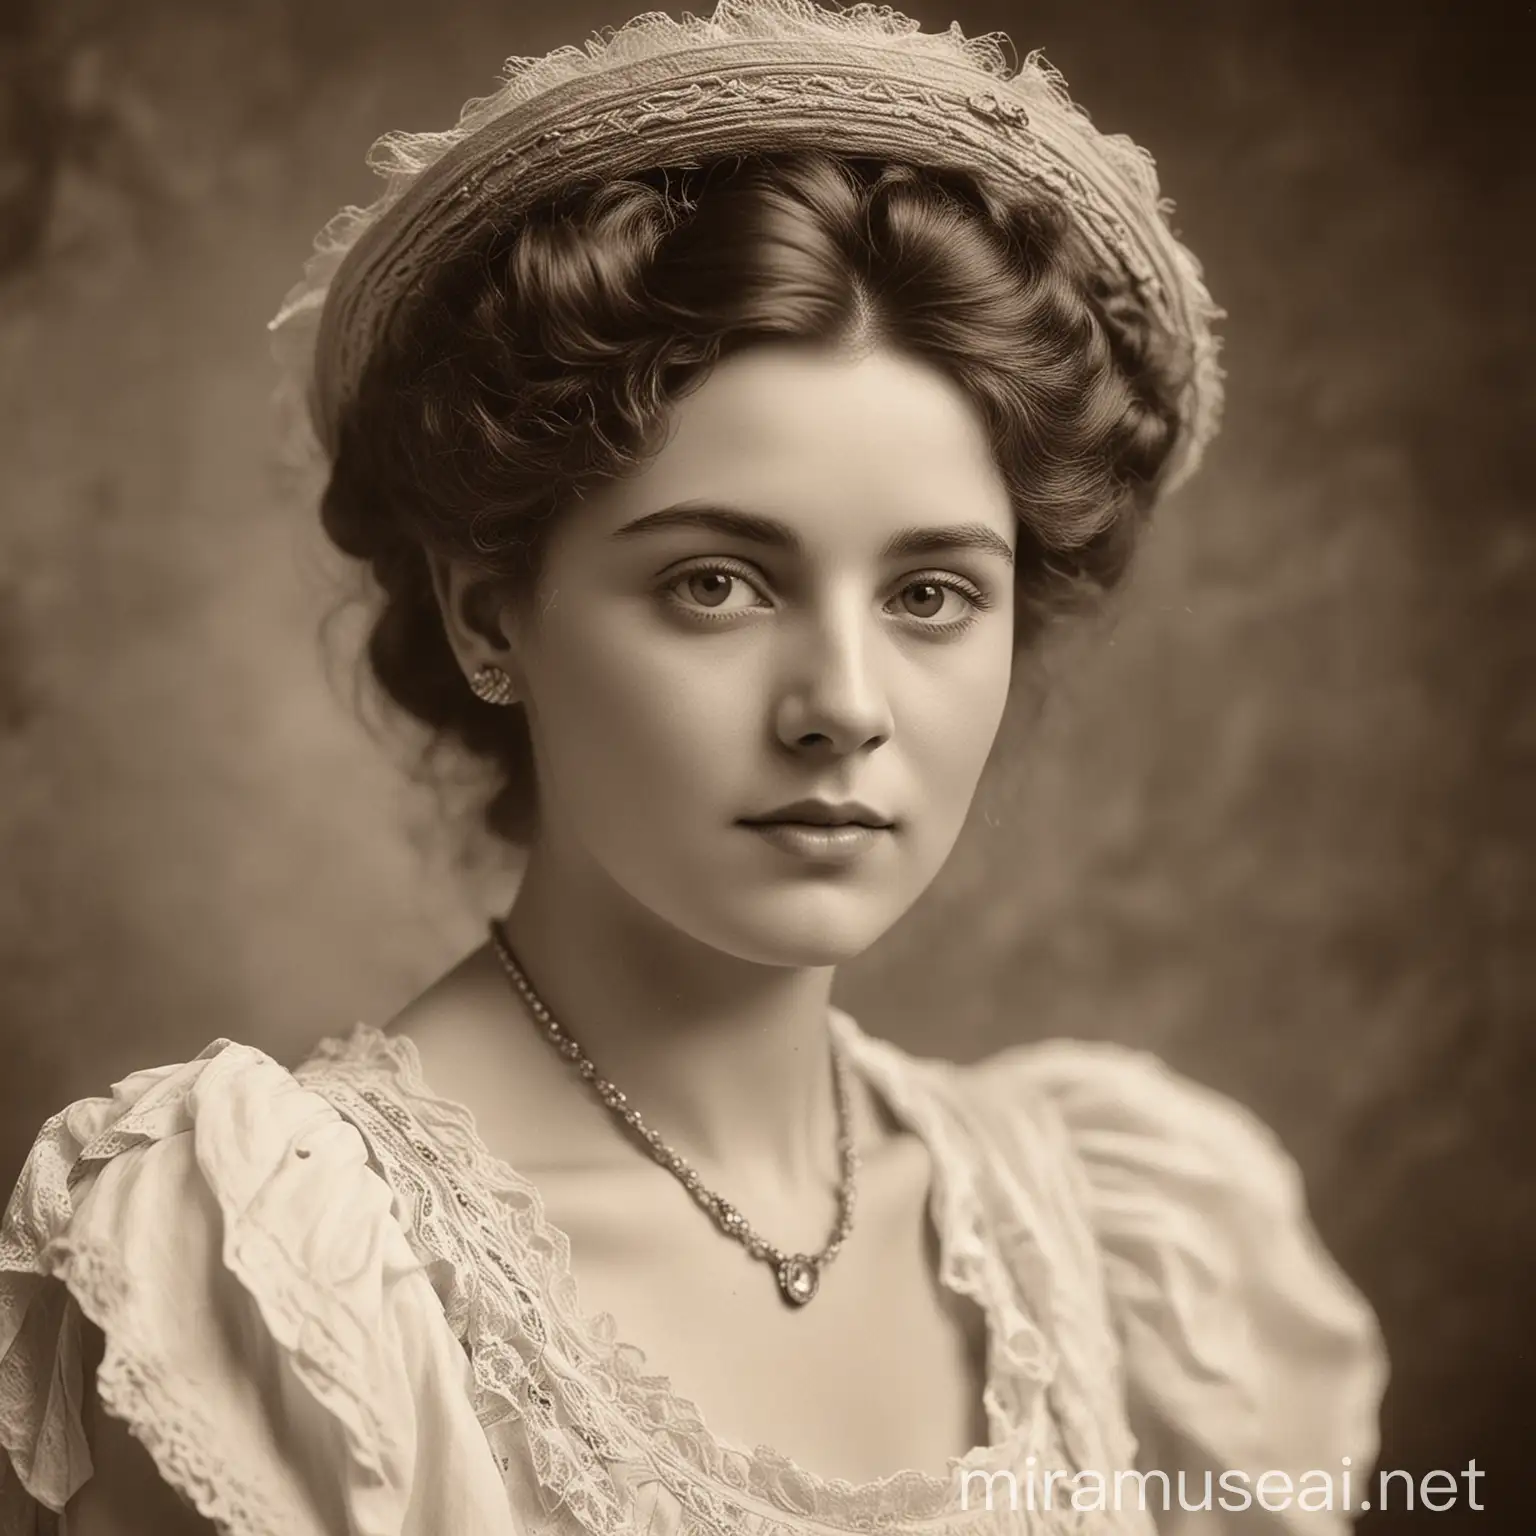 Elegant Edwardian Woman in a Titanic Era Vintage Photograph